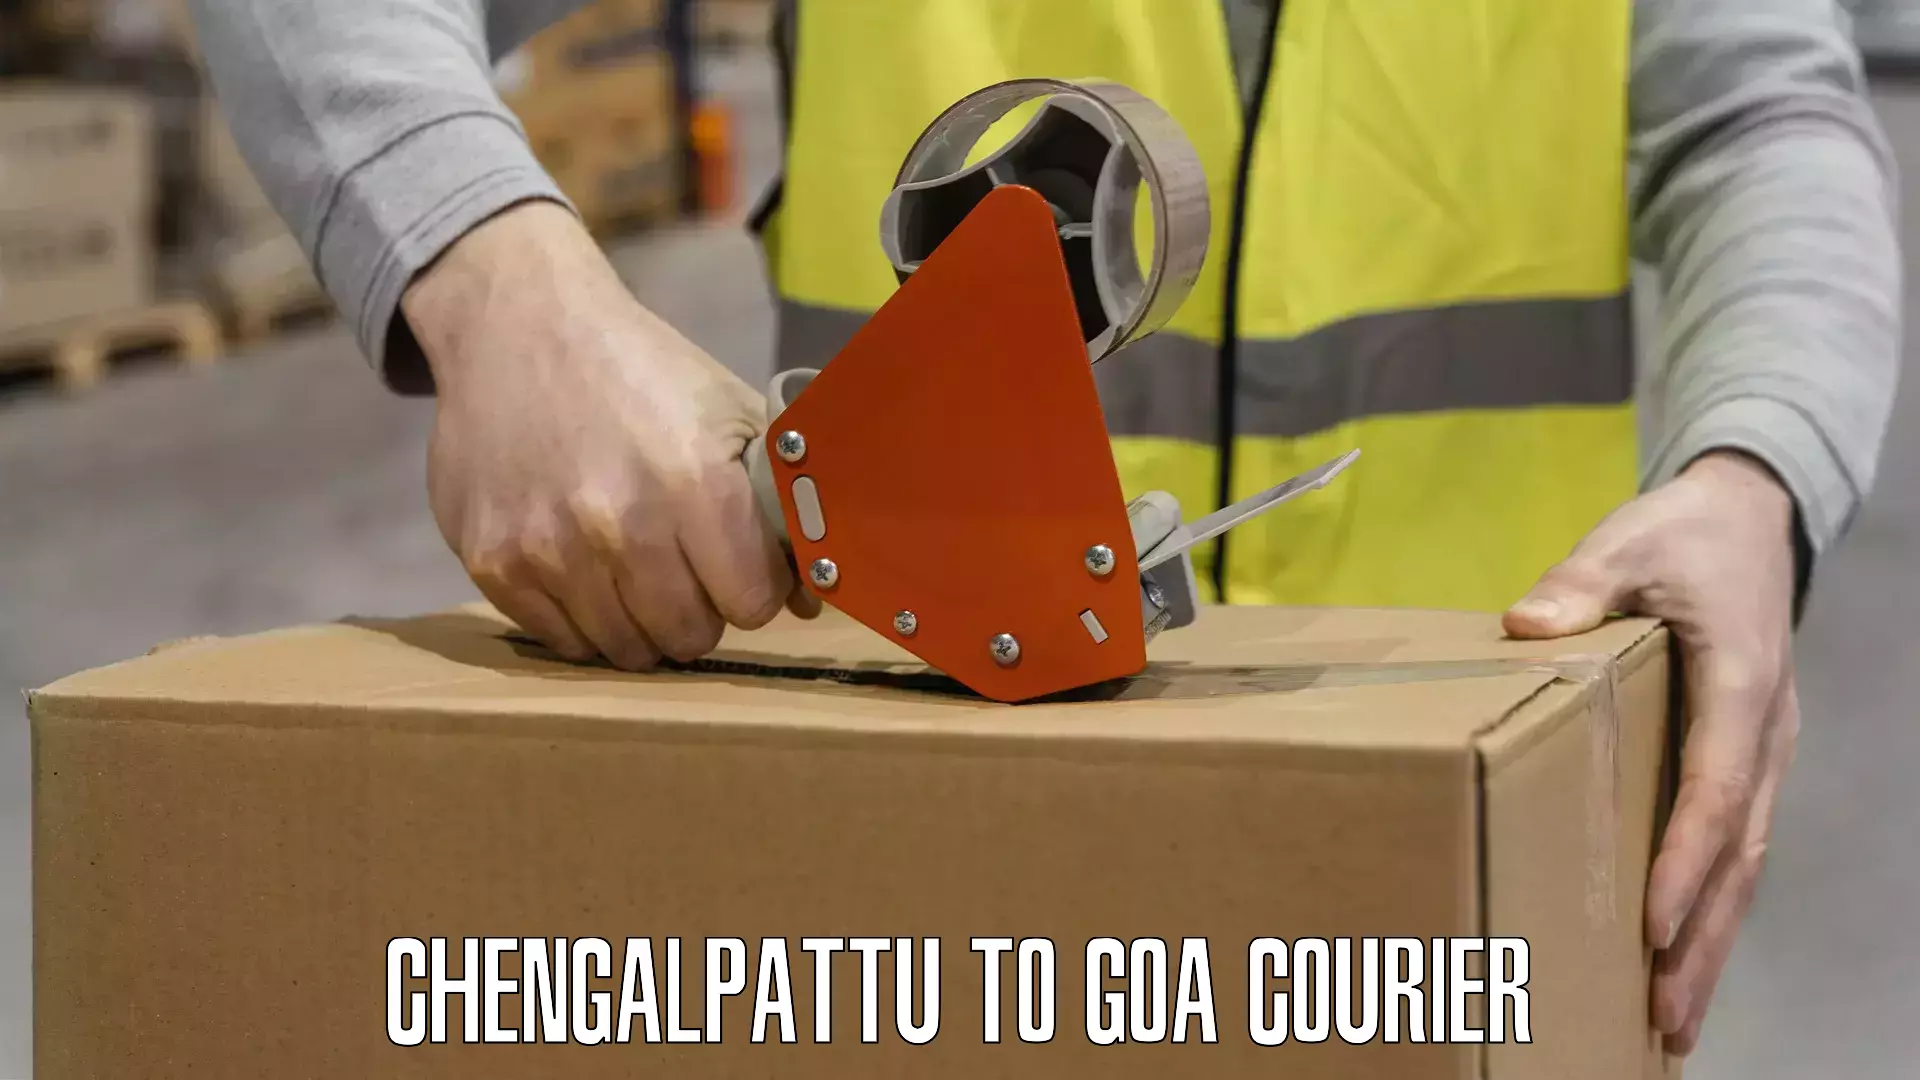 Courier service partnerships Chengalpattu to Goa